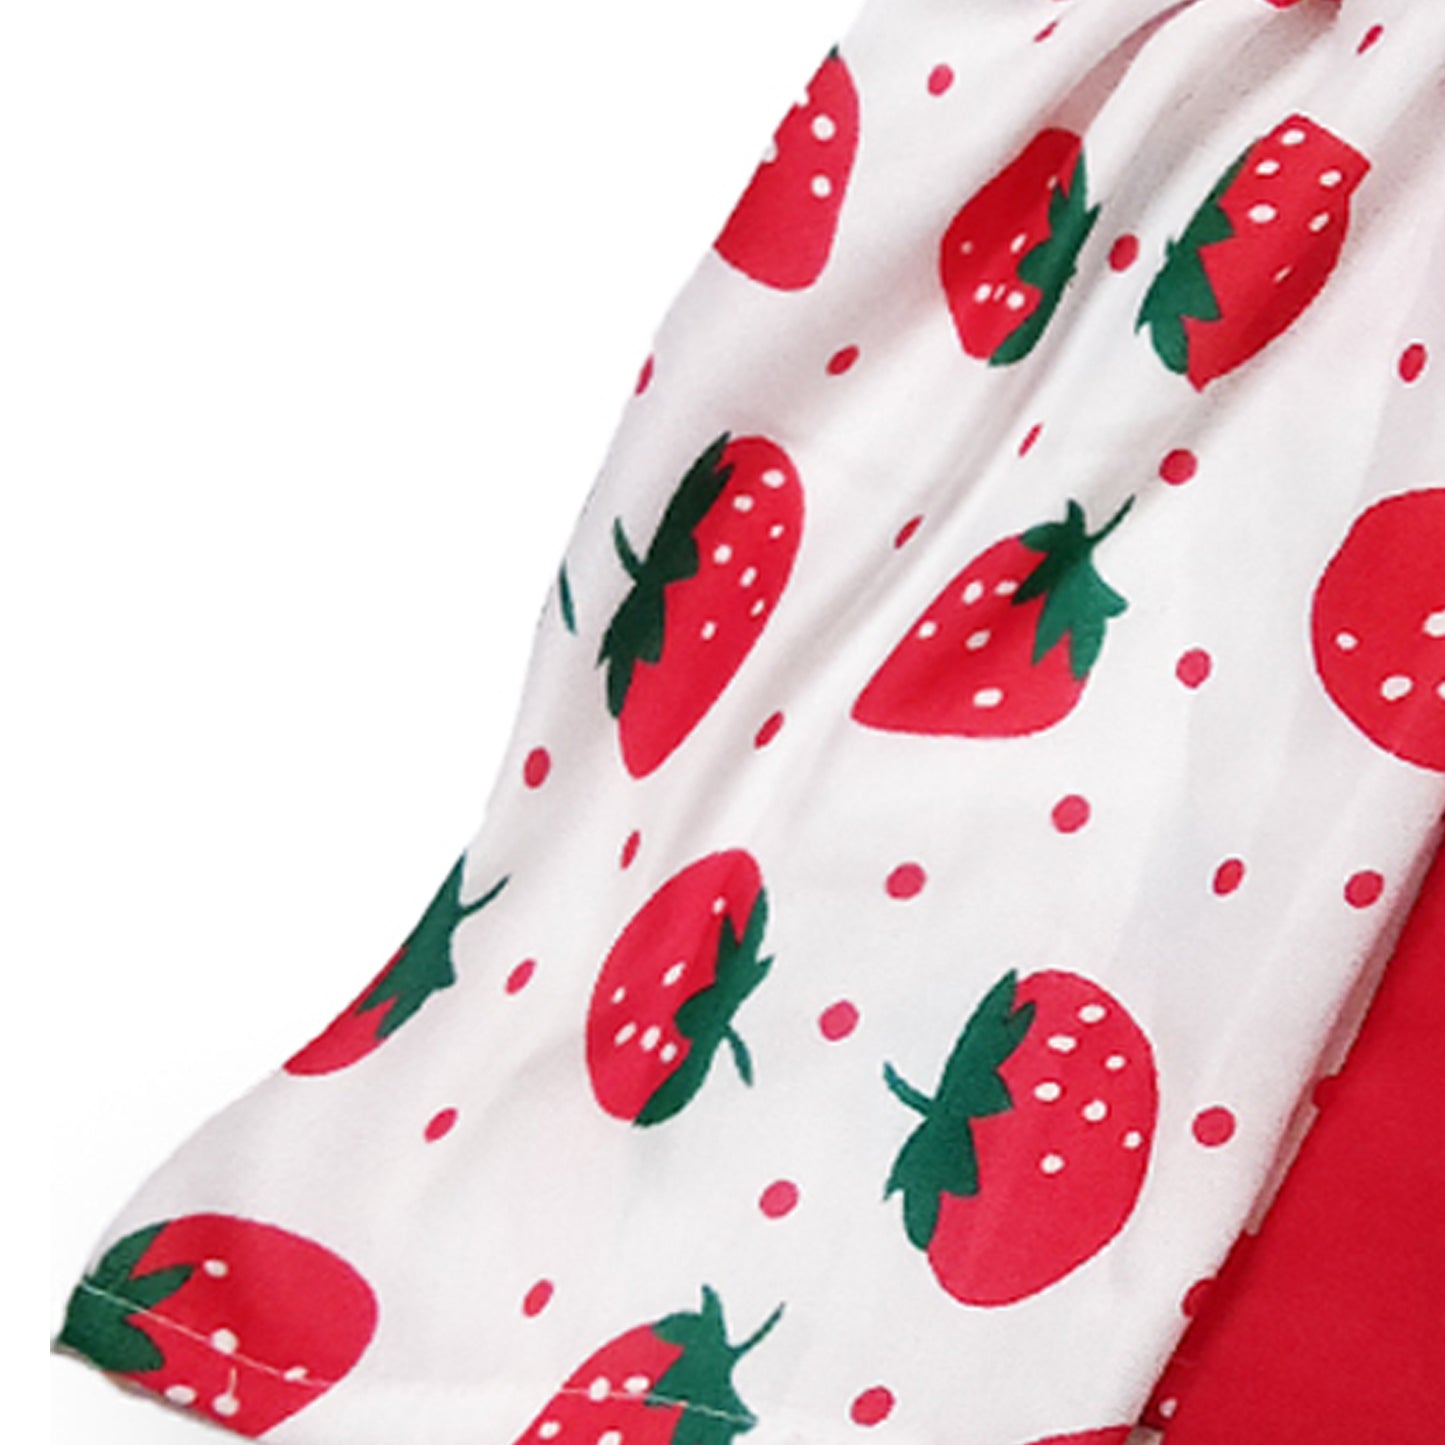 Red Strawberry Stylish Strips Design Midi Frock Dress for kids.